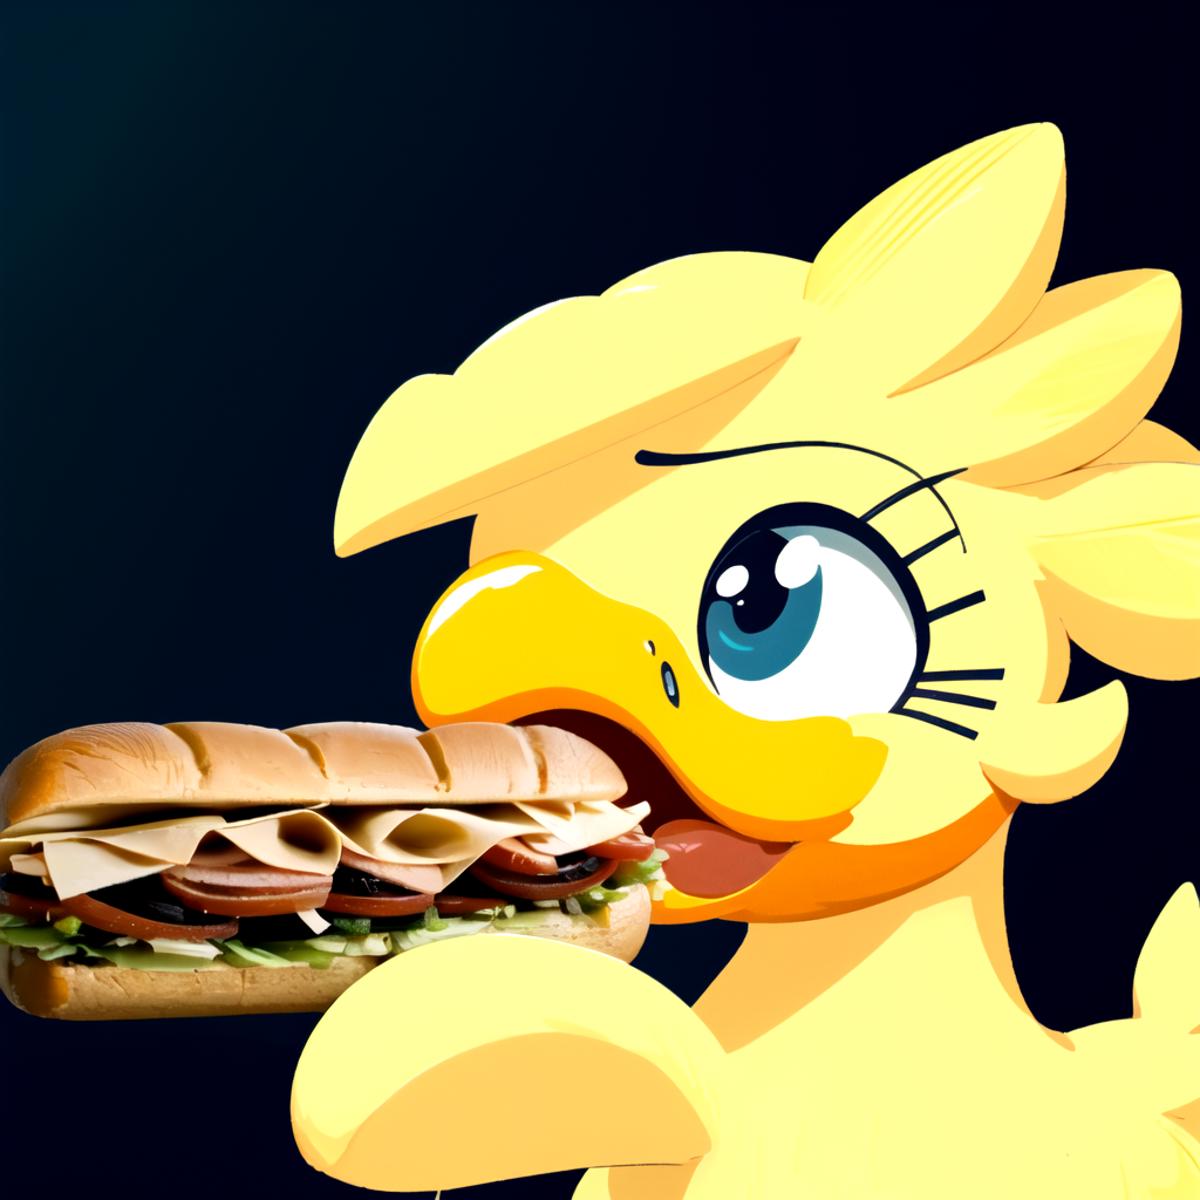 Eatfresh the delicious sandwich model image by Sunbutt